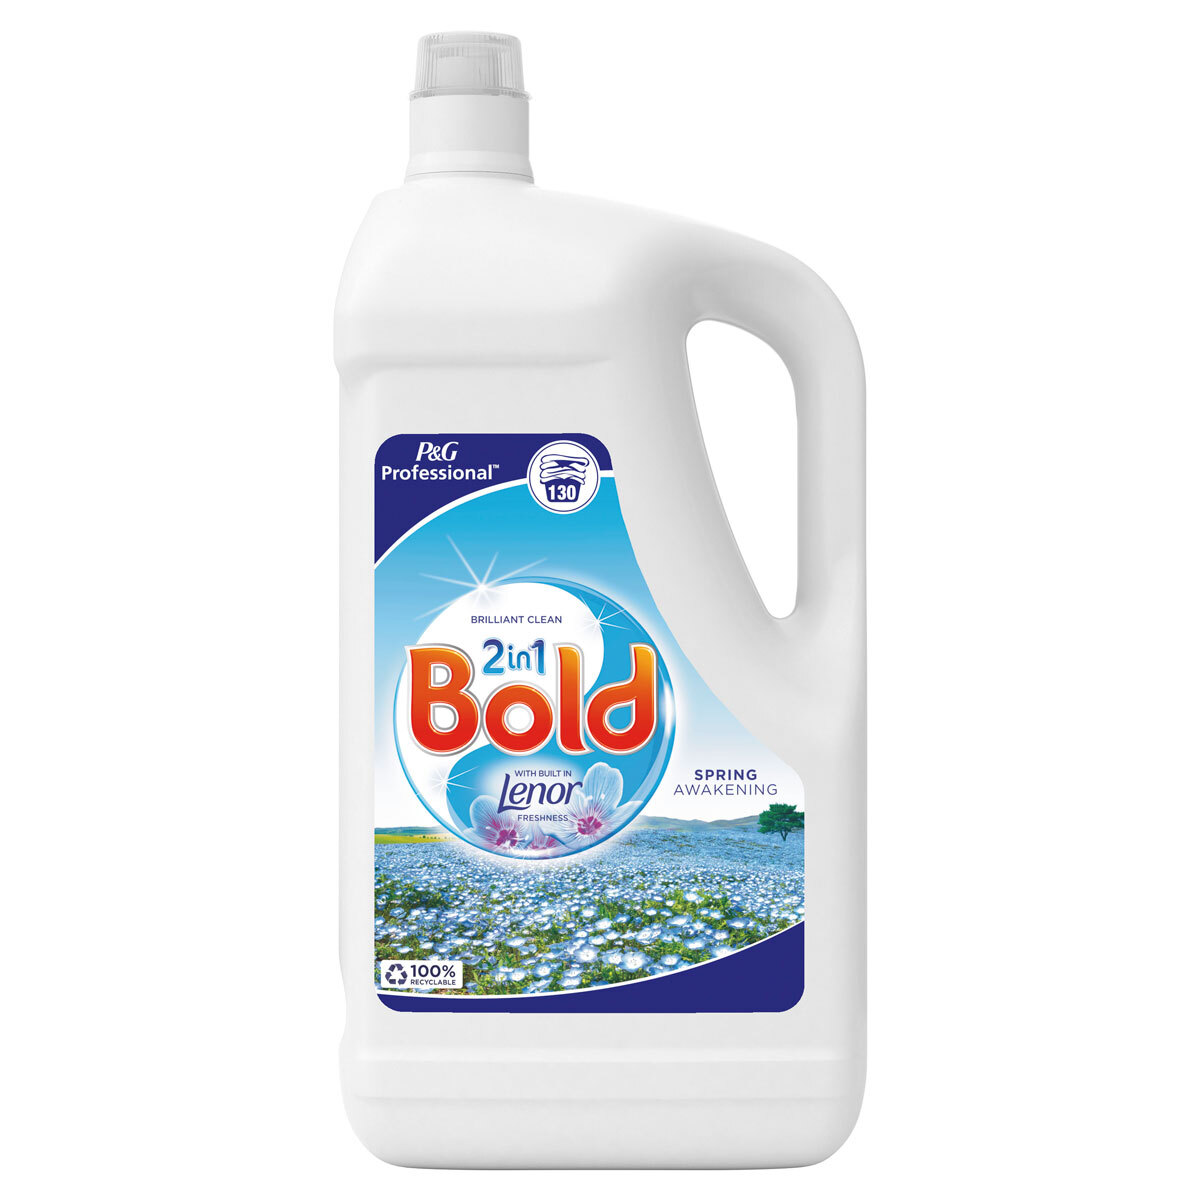 Bold 2-in-1 Laundry Liquid, 4.55L (130 Wash)